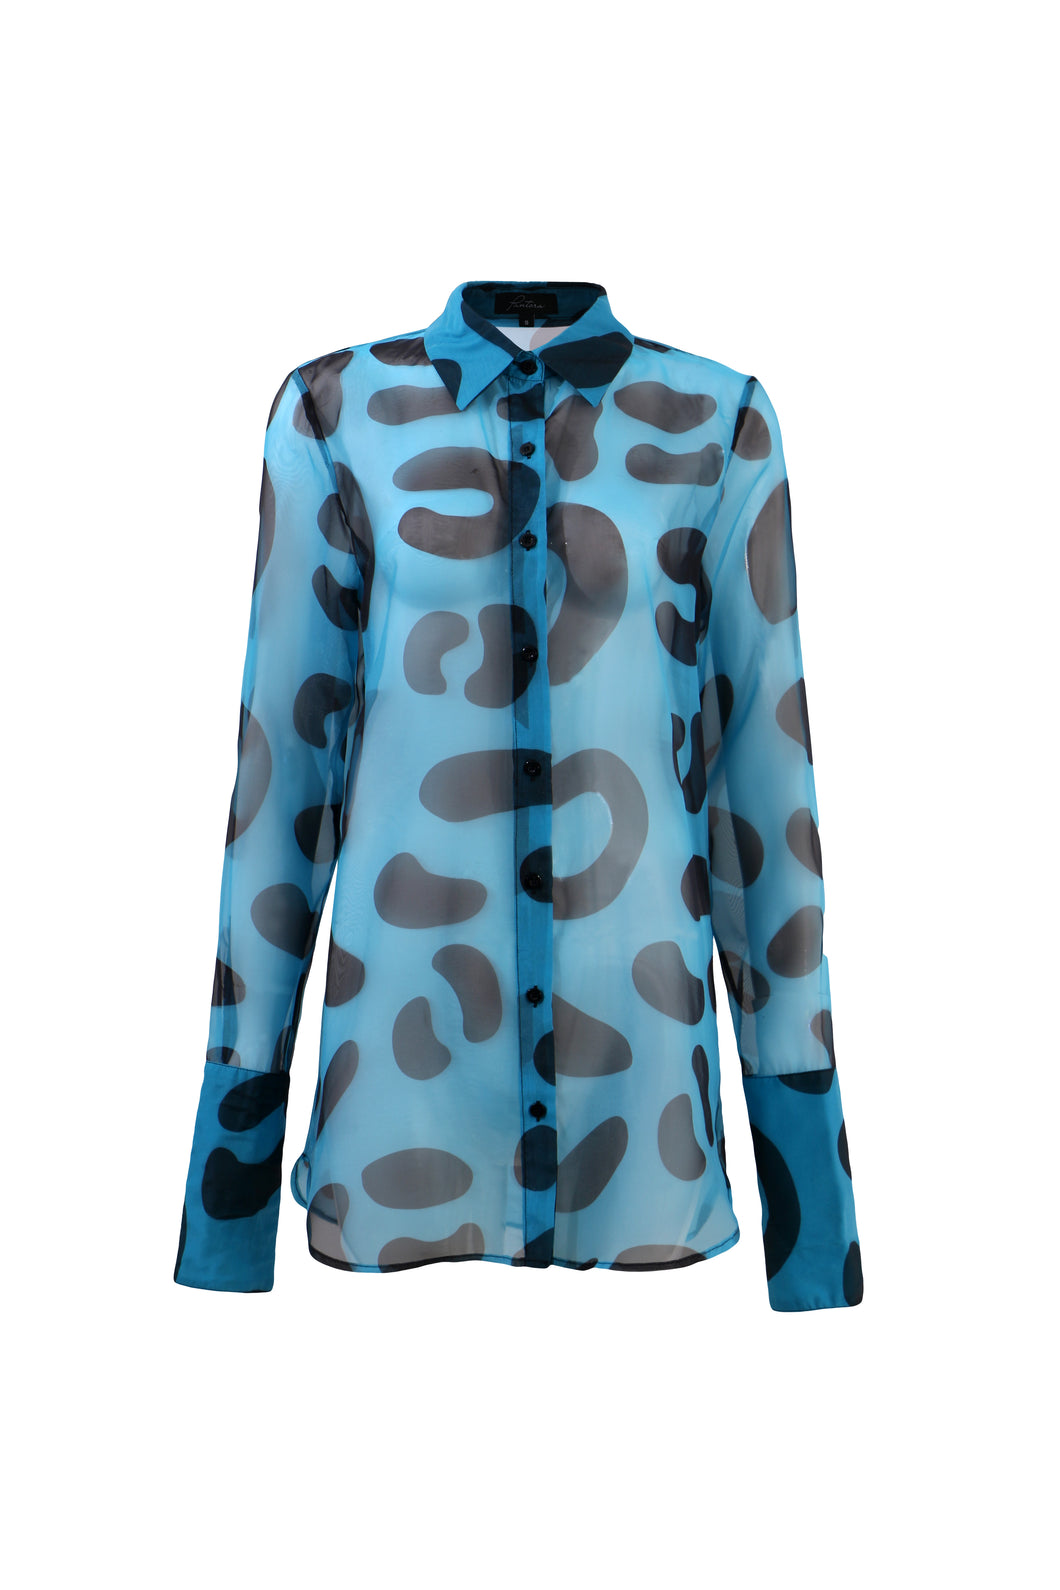 Latisha Button Up - Blue Leopard